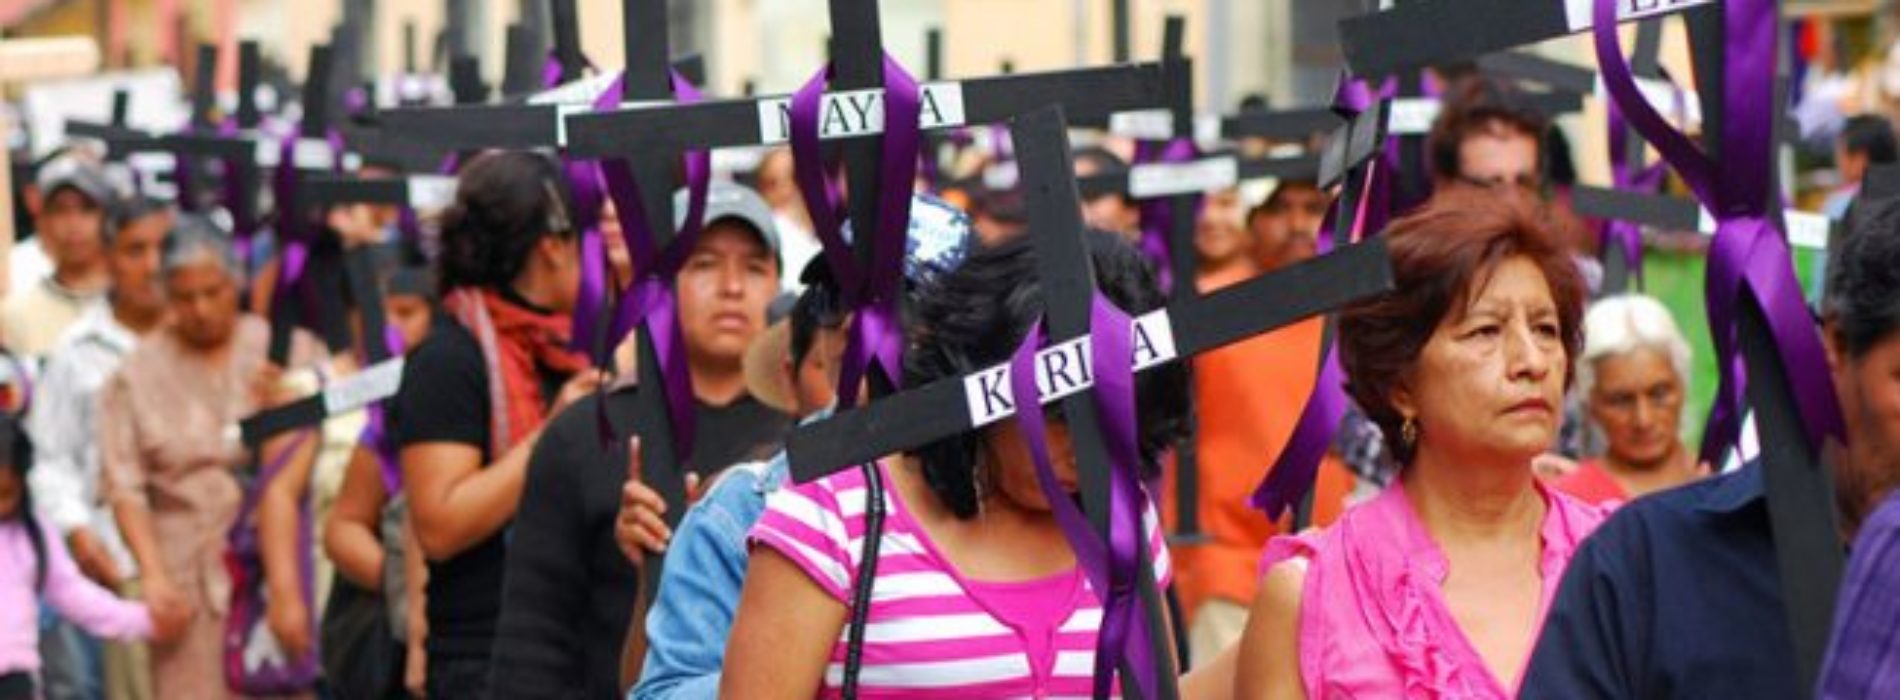 Emiten Alerta de Género para Oaxaca para atender y prevenir
feminicidios